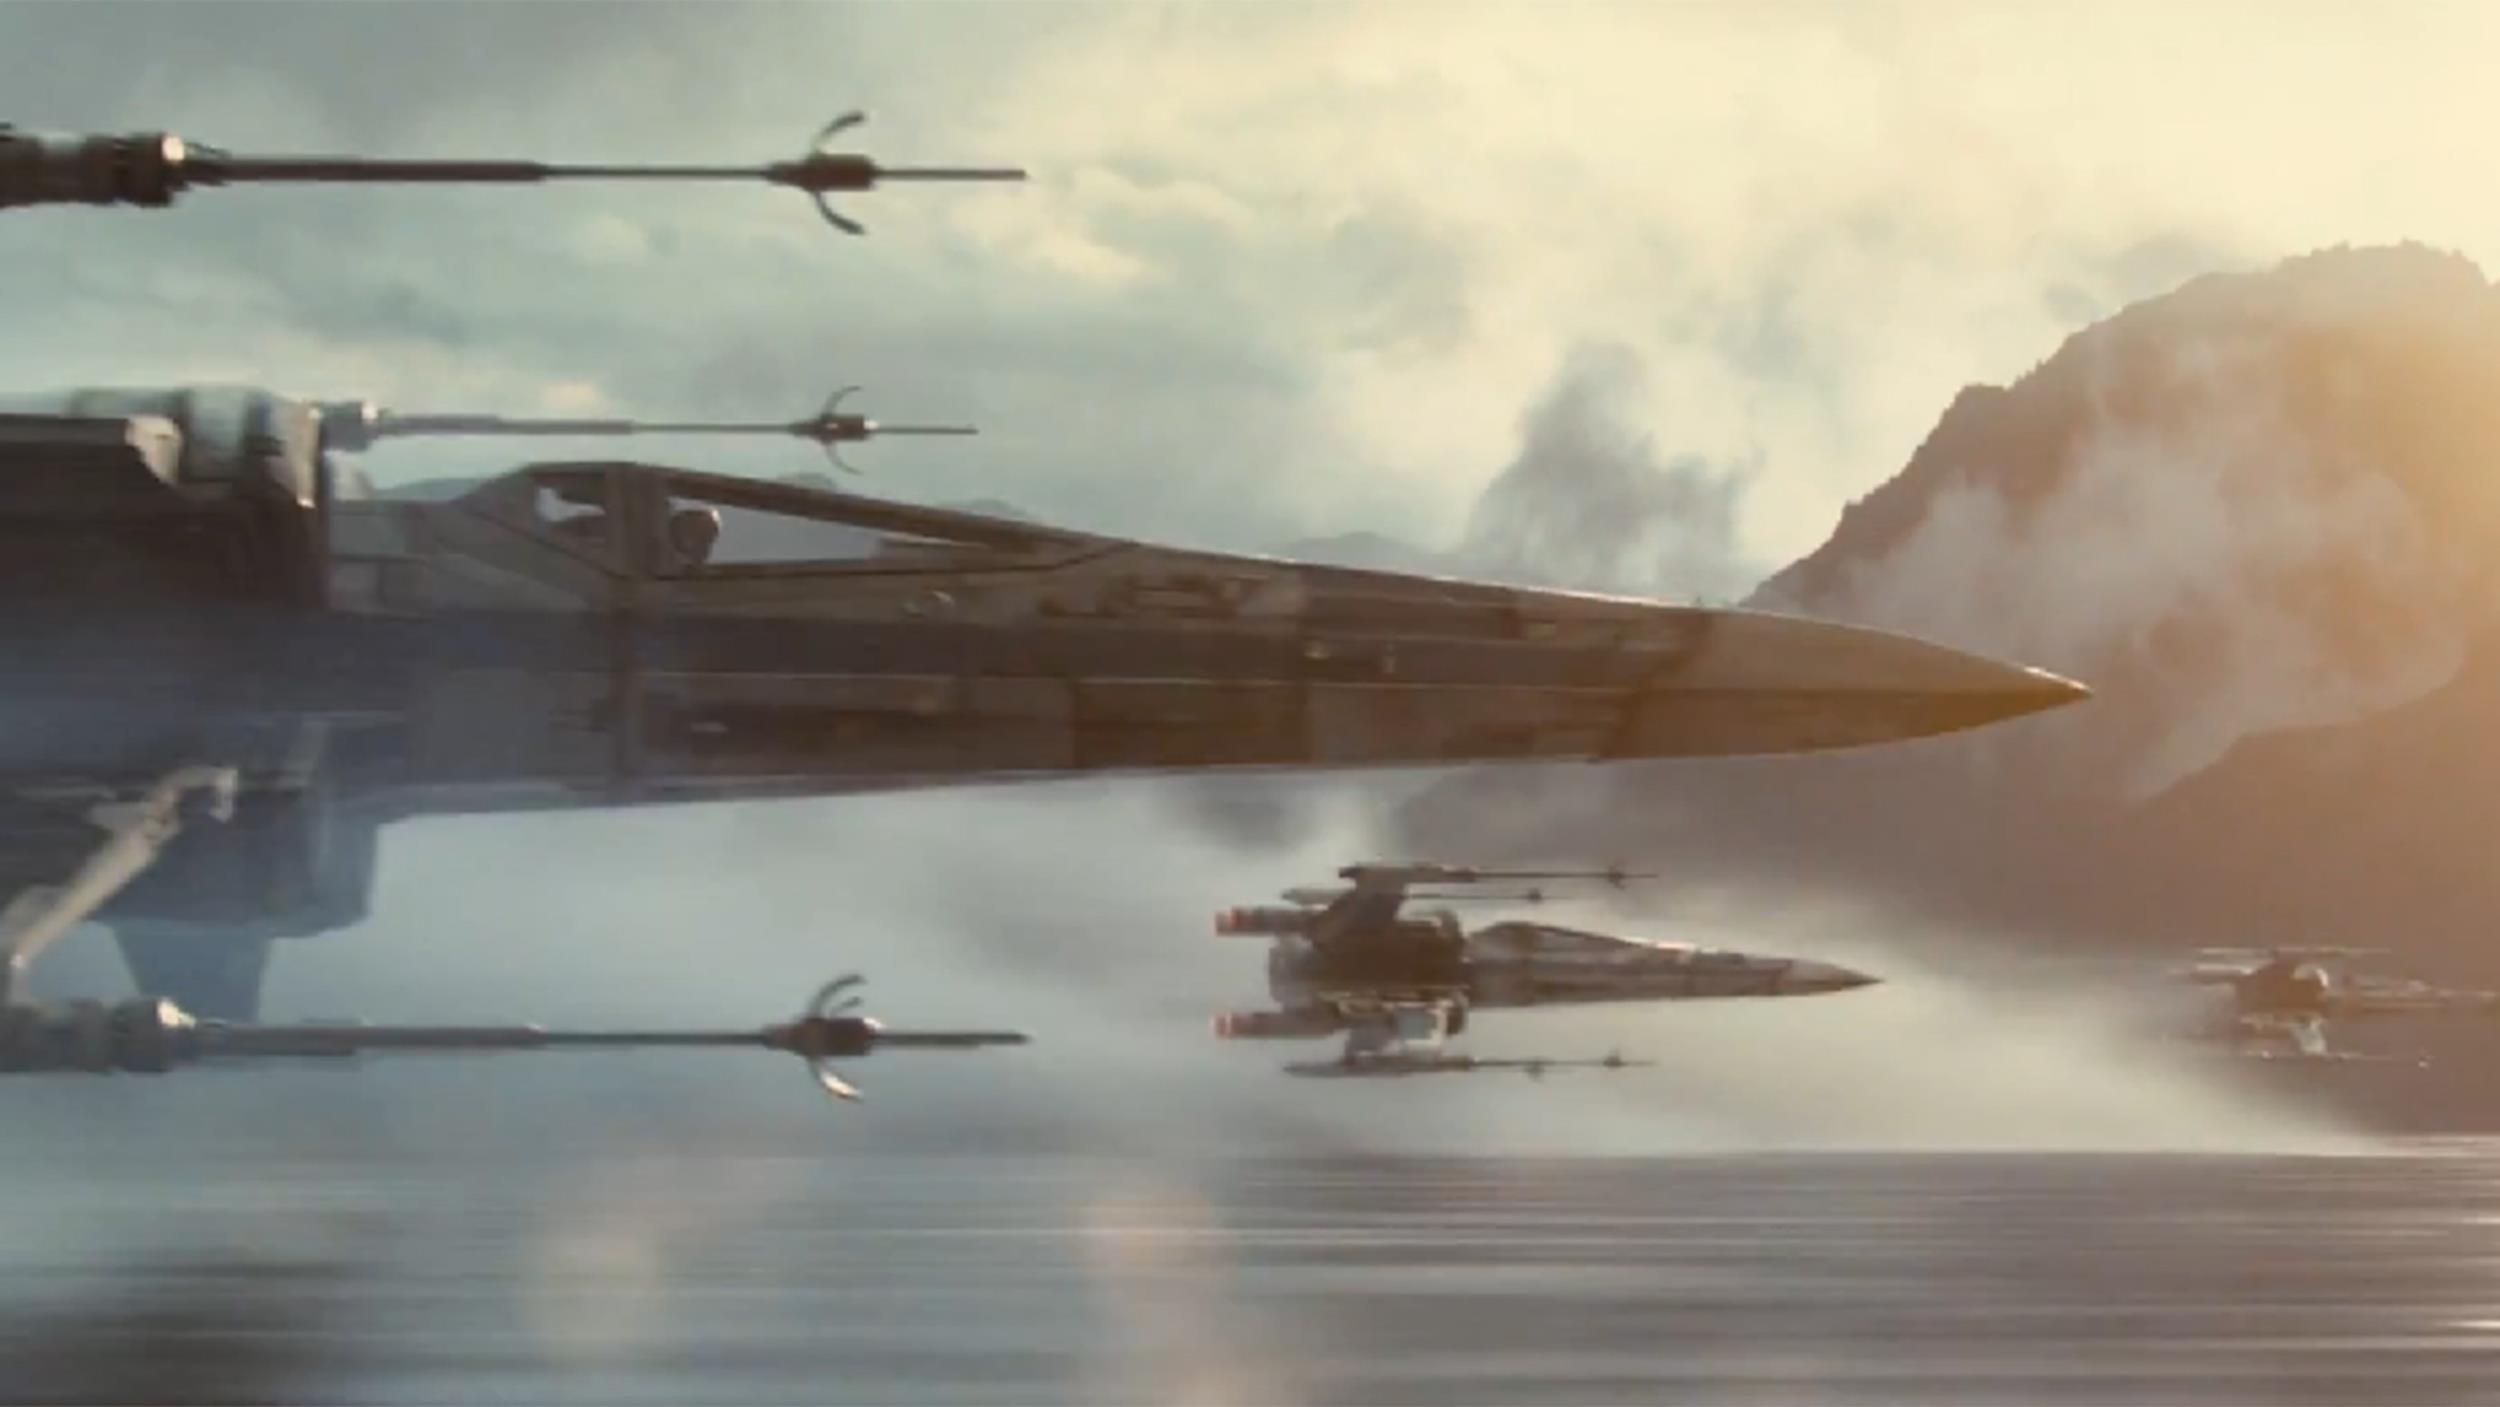 Star Wars The Force Awakens Teaser Trailer Image Analysis